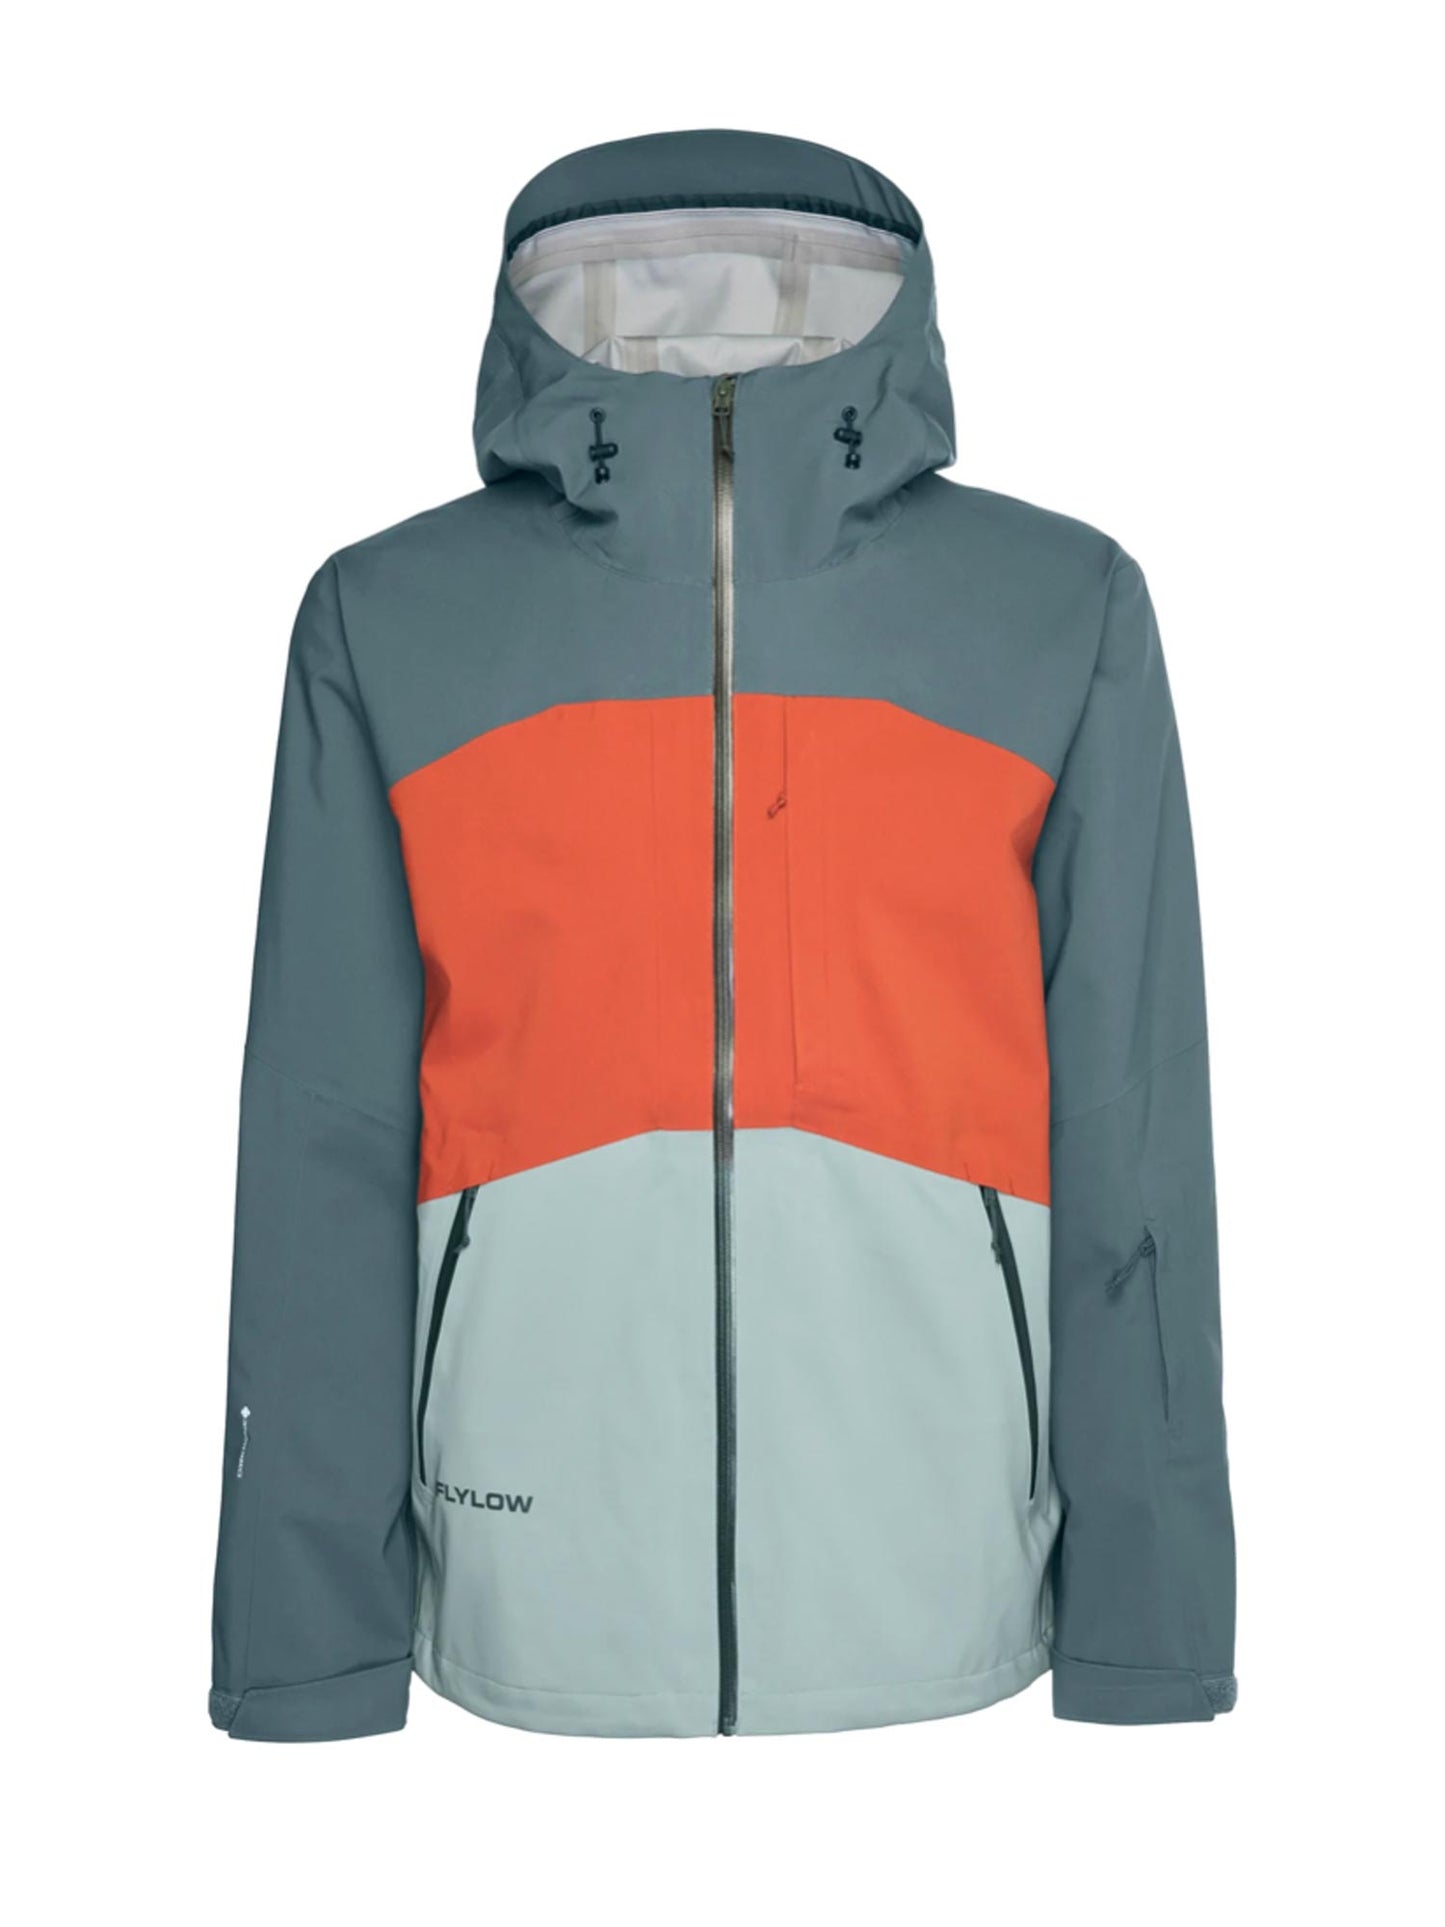 men's Flylow Malone ski/snowboard jacket